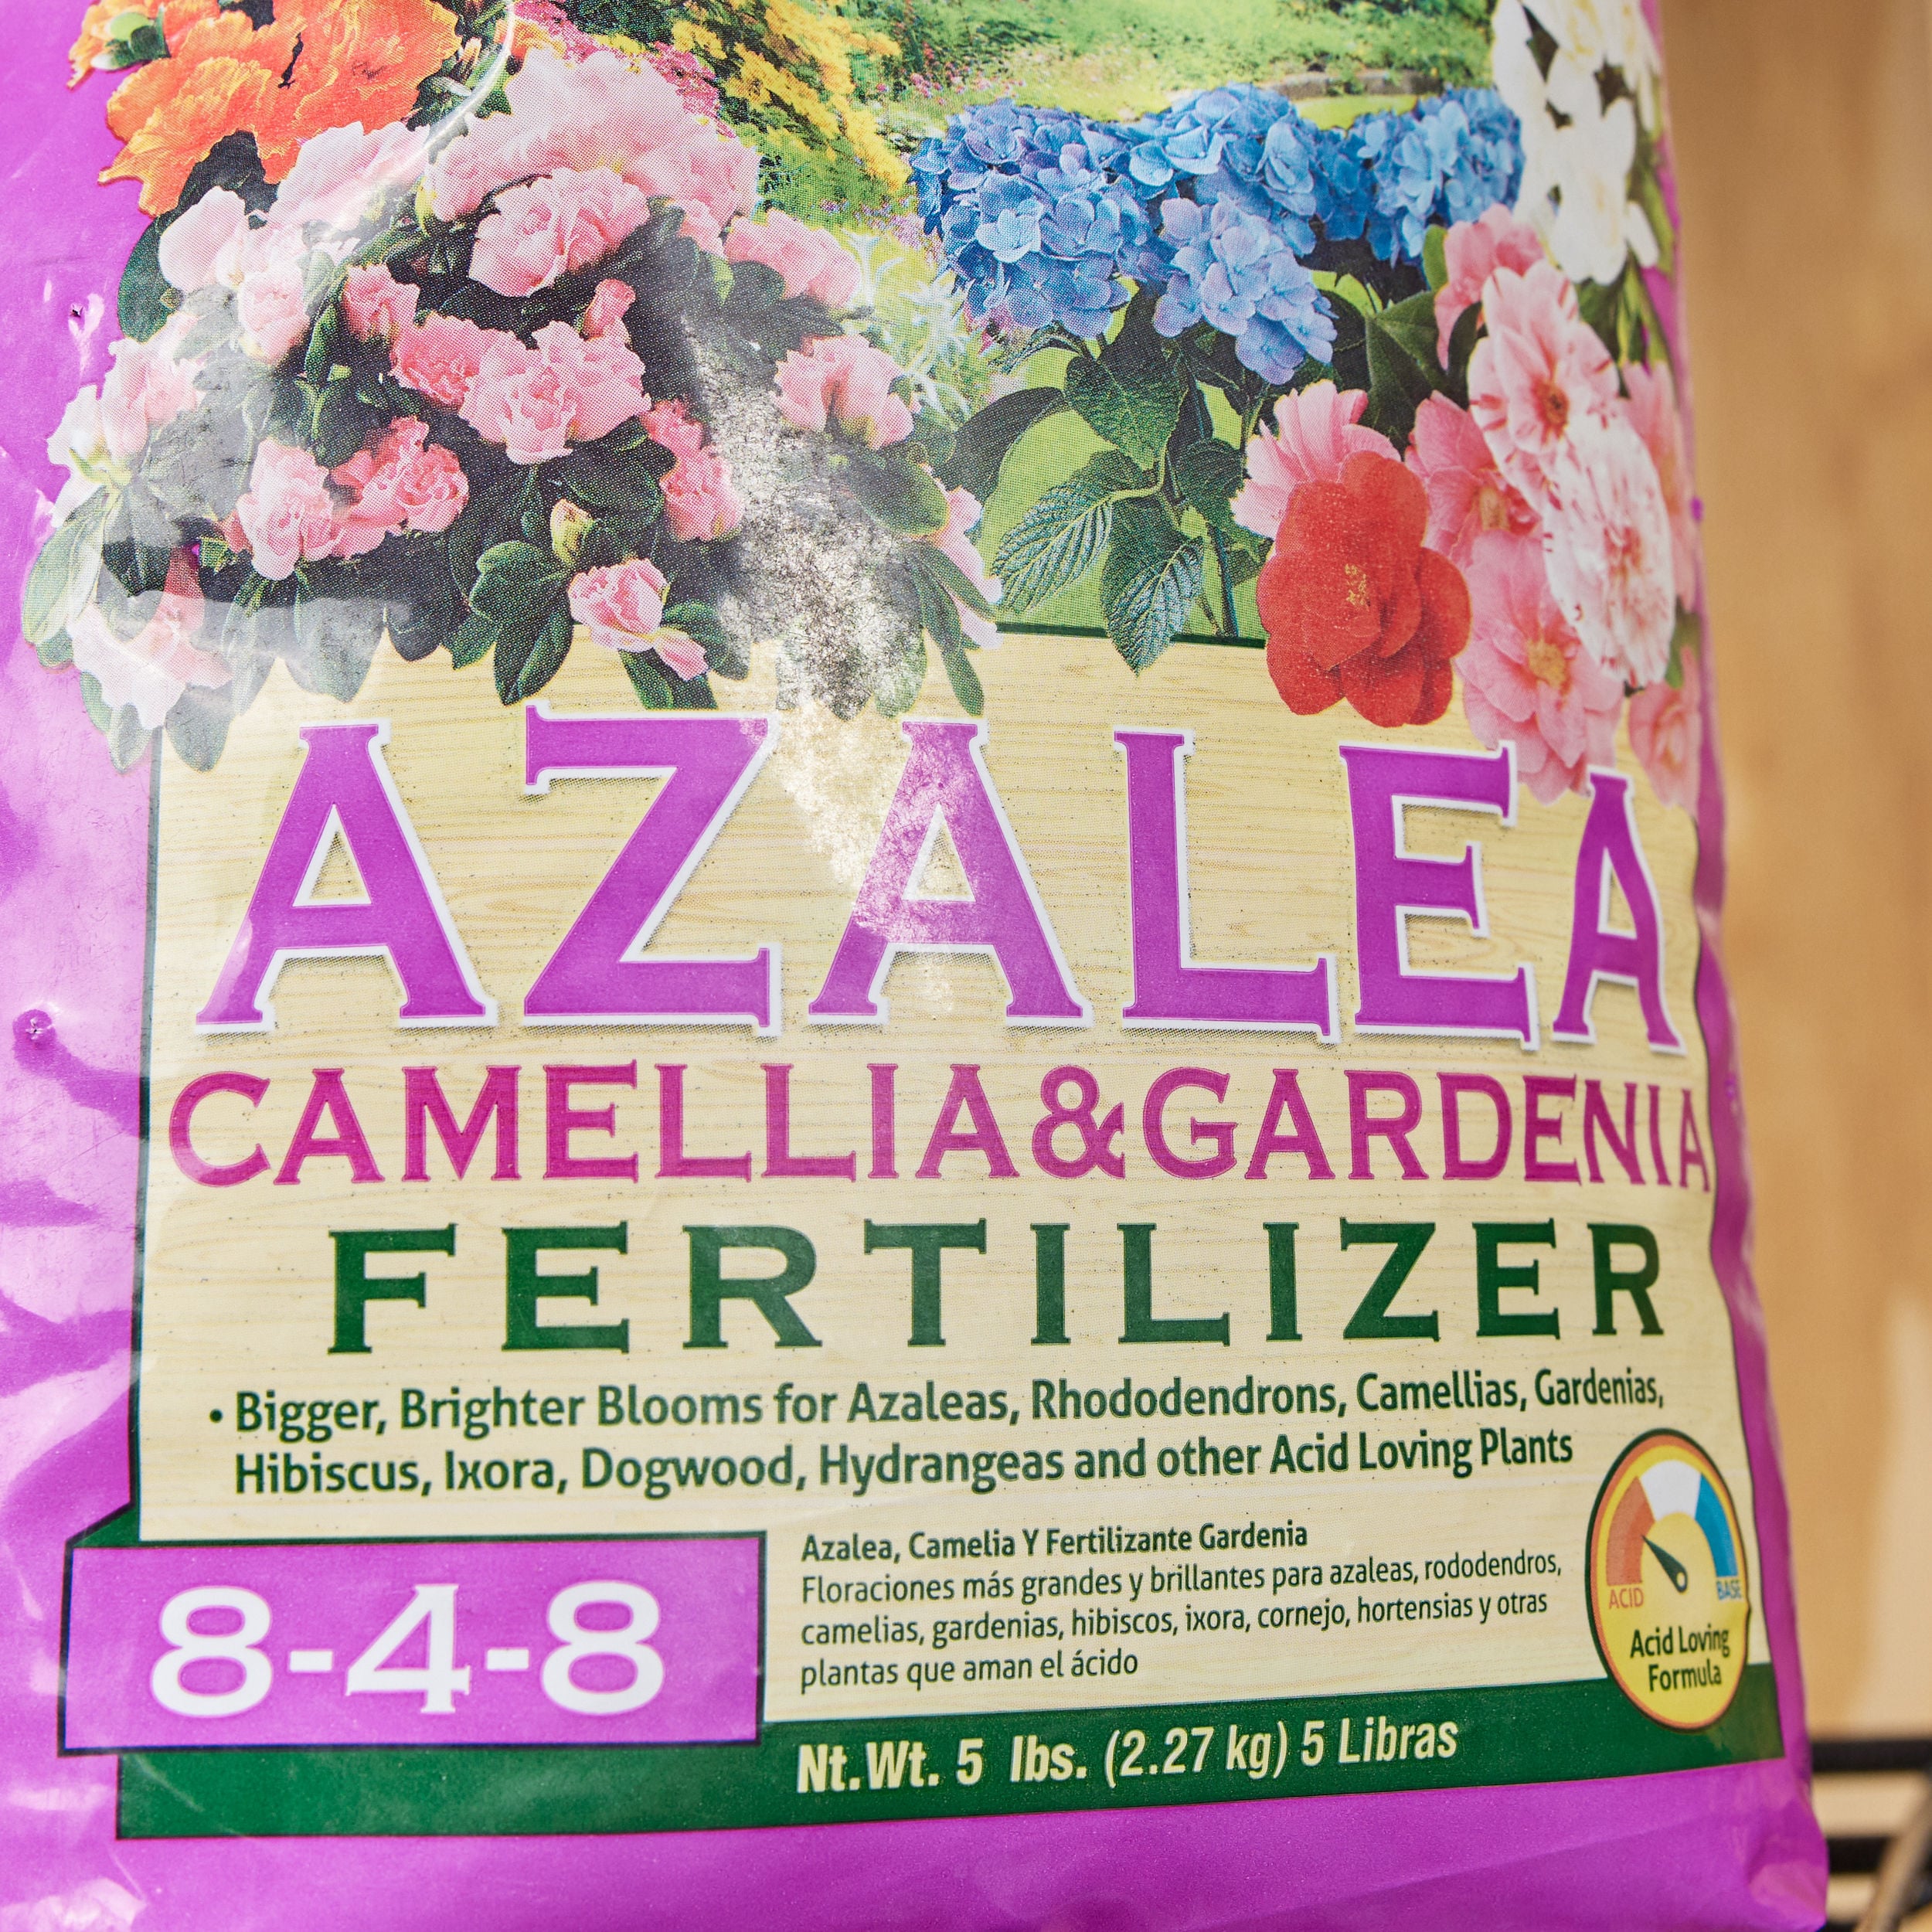 Azalea and camellia fertilizer Plant Food at 